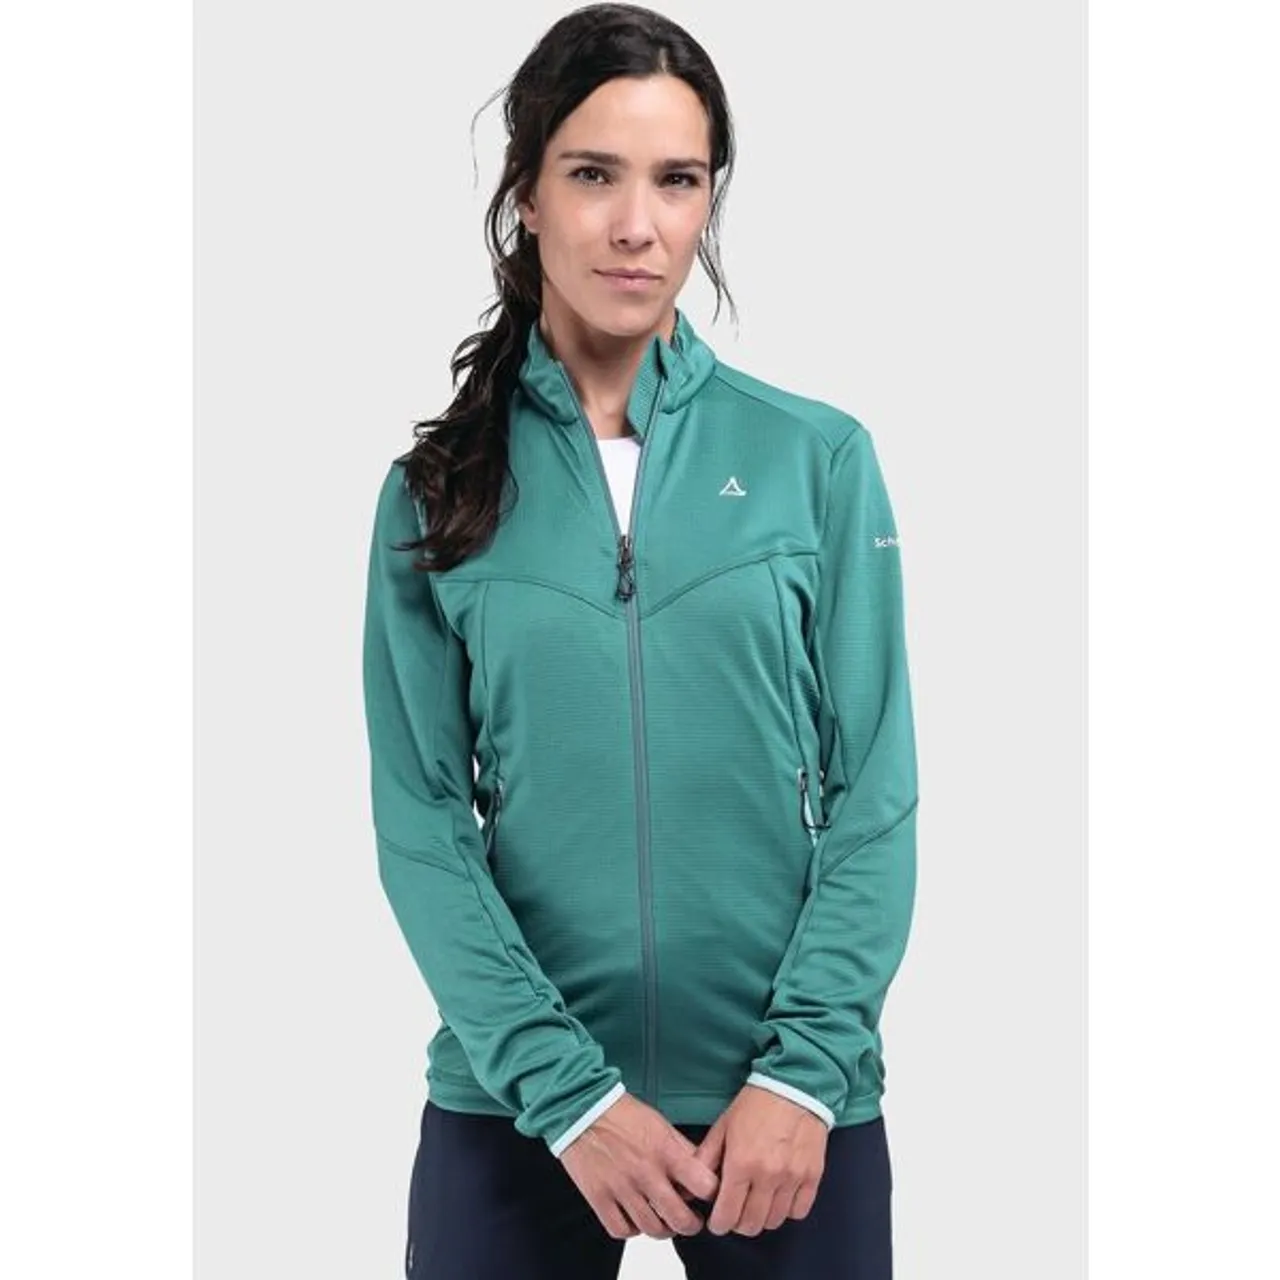 Fleecejacke SCHÖFFEL "Fleece Jacket Svardalen L" Gr. 44, grün (6755, grün) Damen Jacken Sportjacken